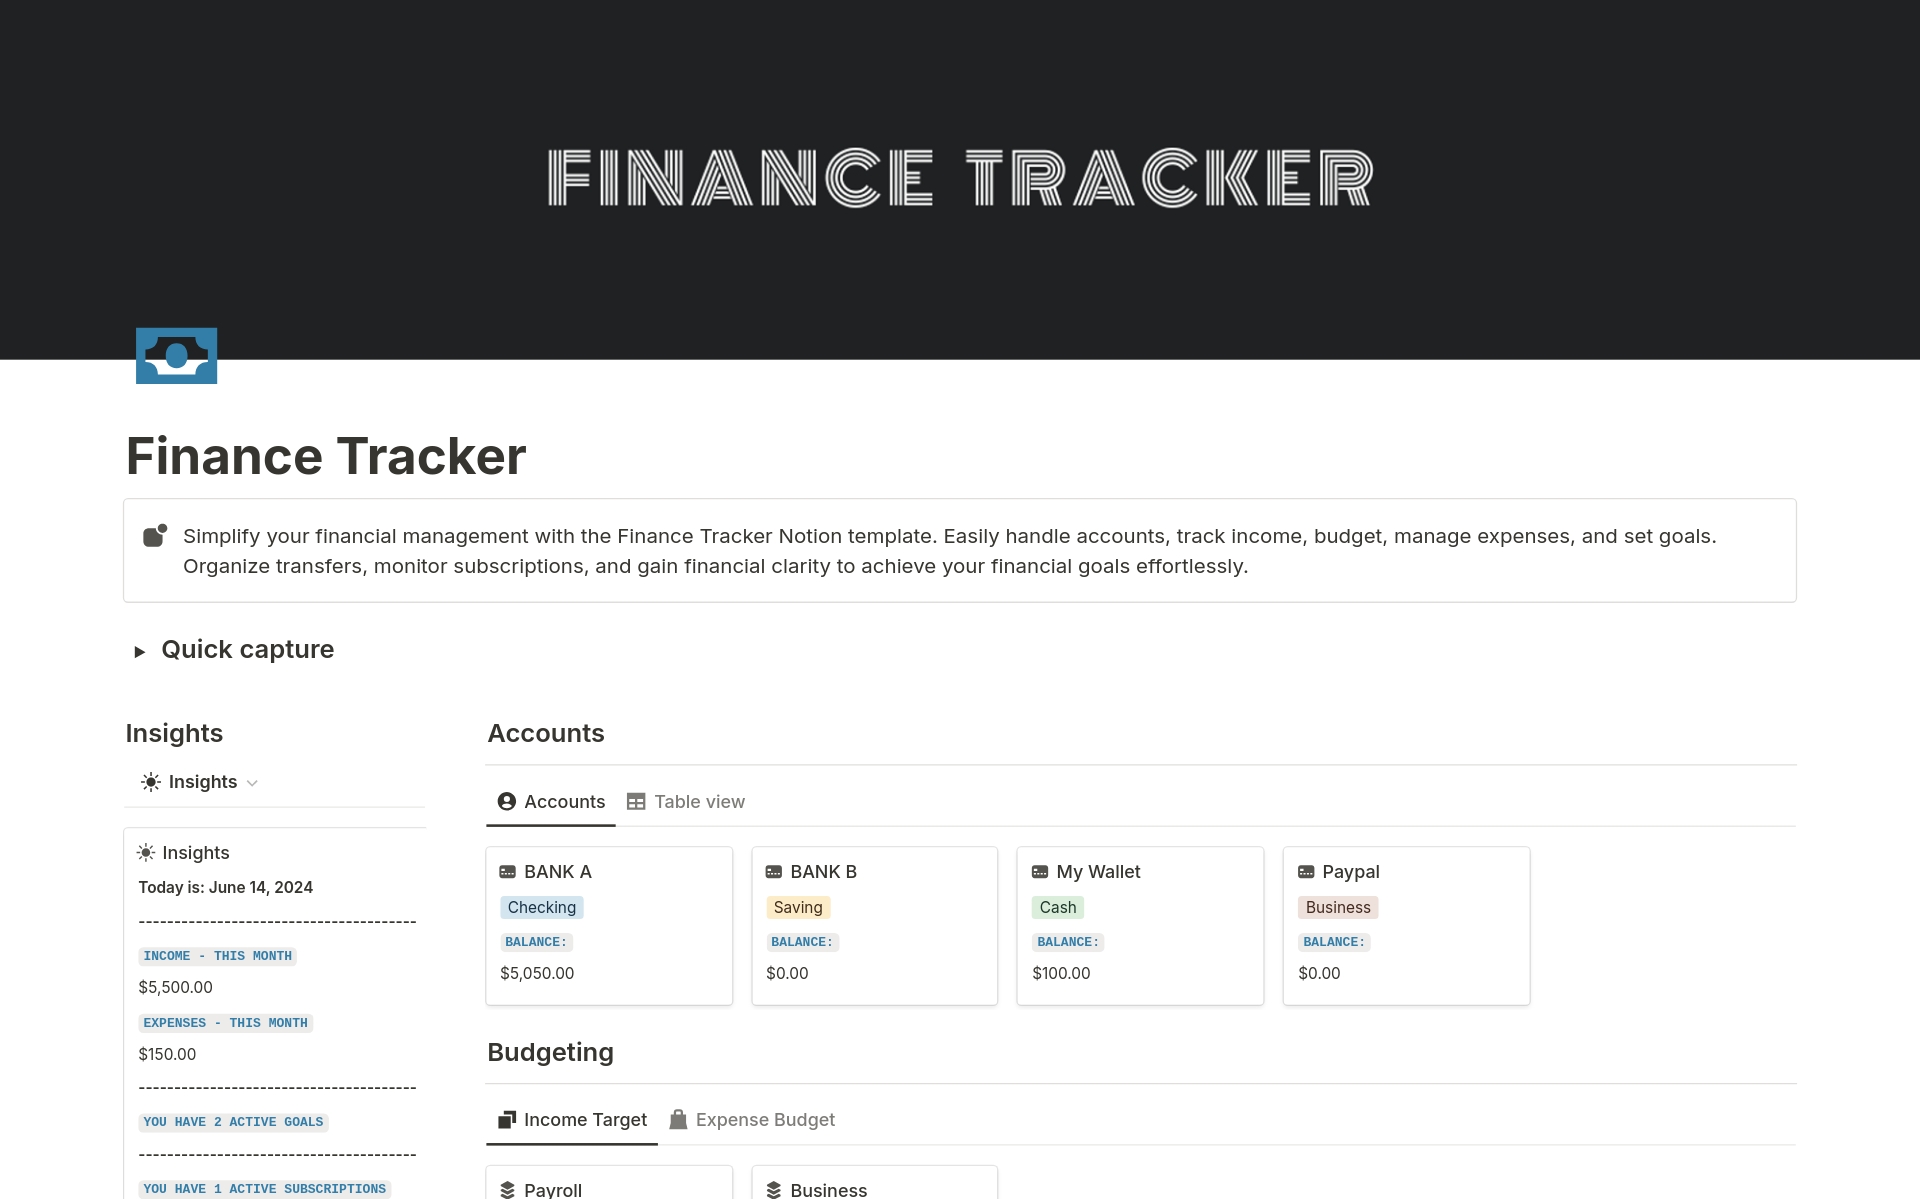 Aperçu du modèle de Finance tracker